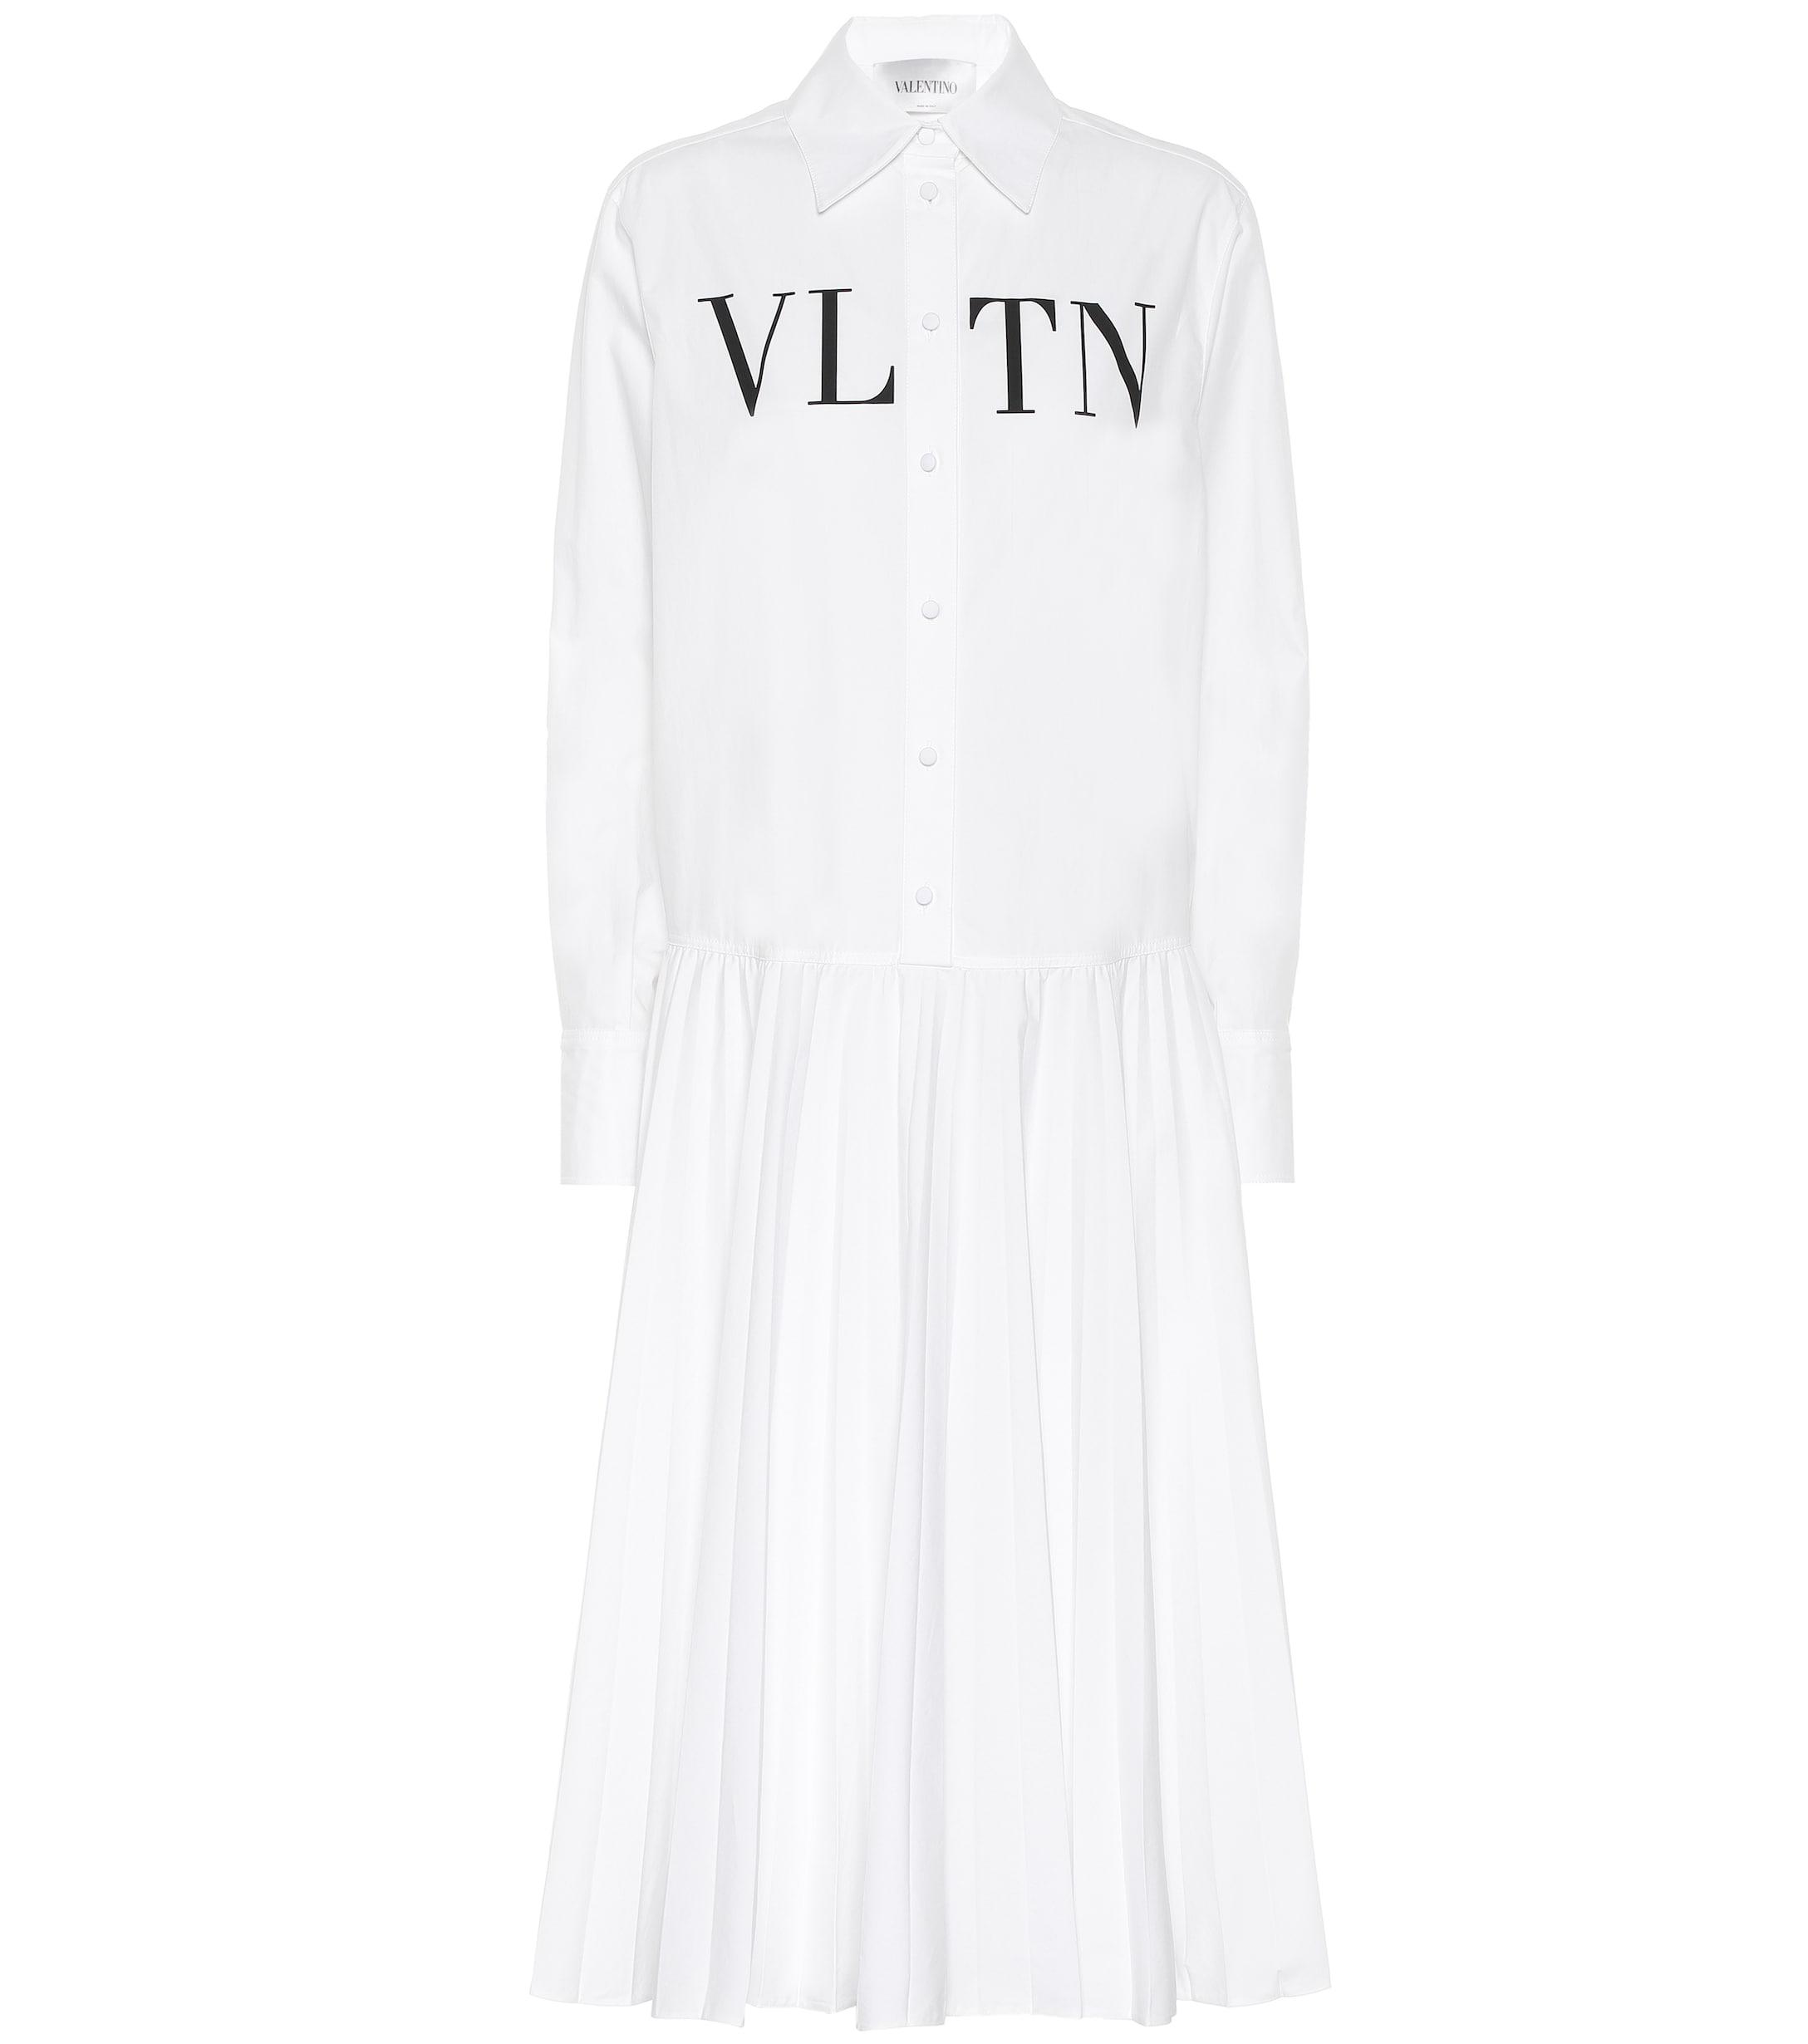 Valentino Vltn Cotton Shirt Dress in ...